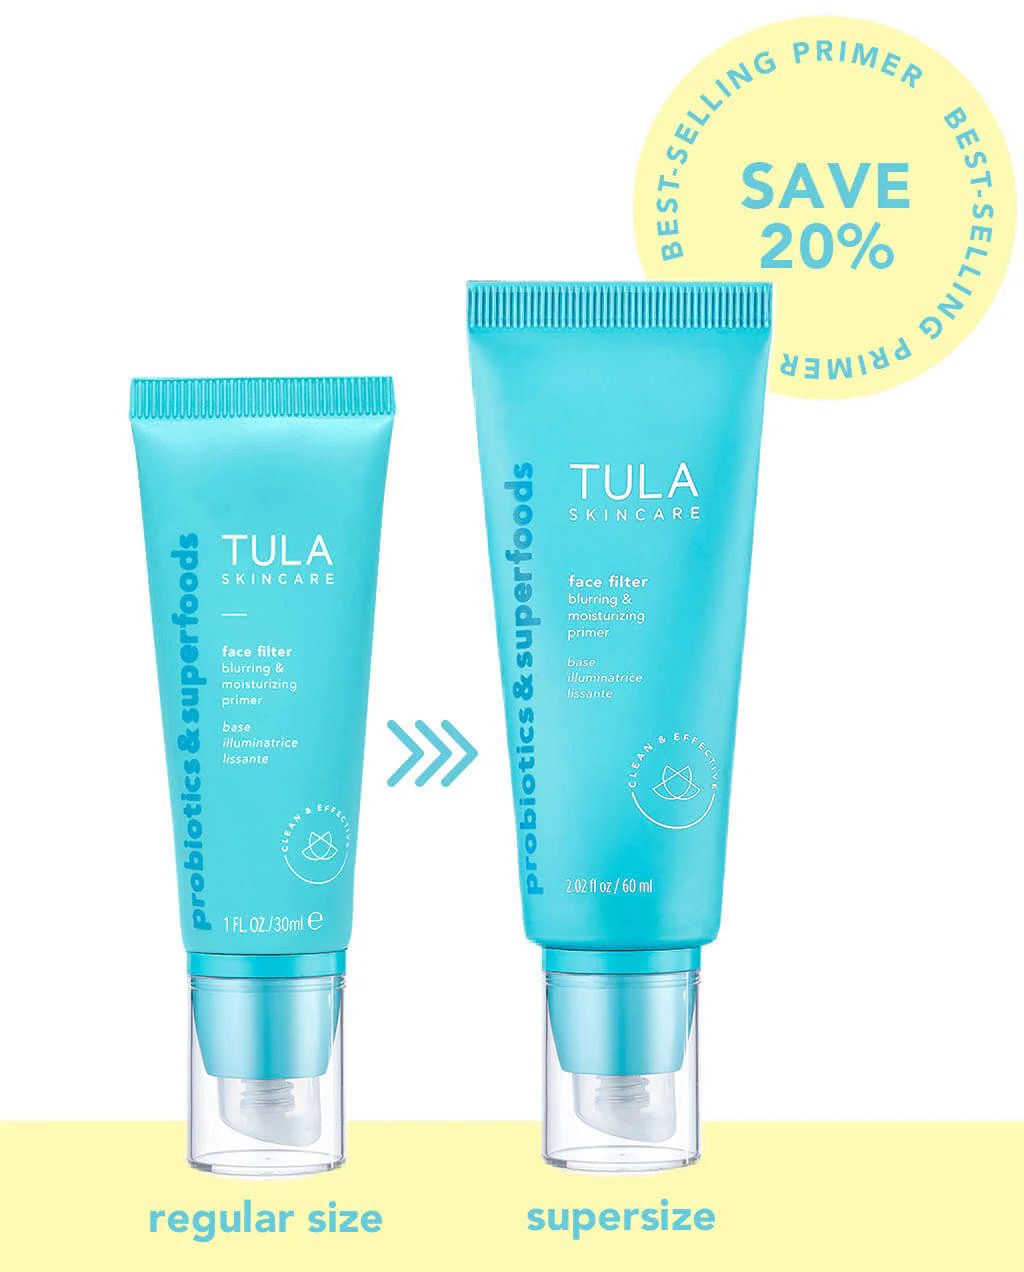 blurring & moisturizing primer (supersize) | Tula Skincare